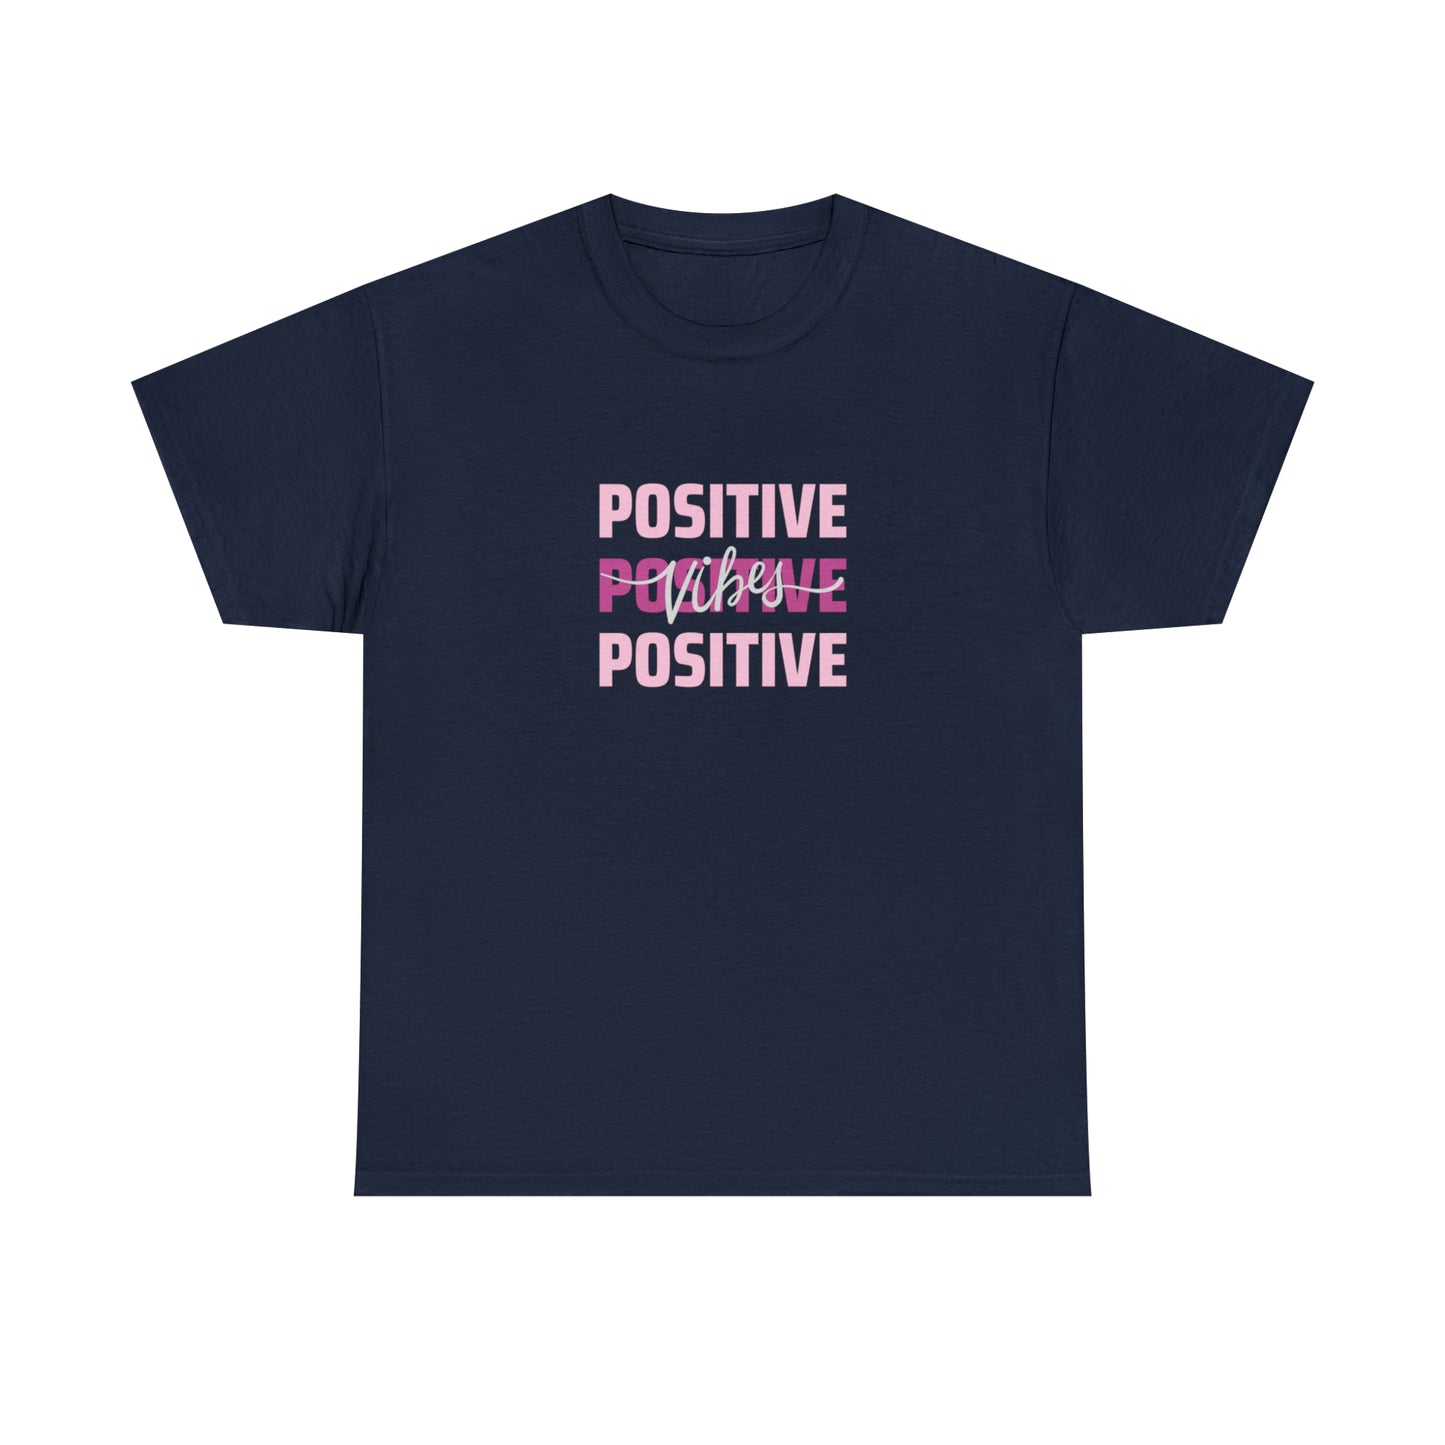 POSITIVE VIBES INSPIRATIONAL T Shirt, Positive Vibes Only Motivational Shirt, Good Vibes Tee